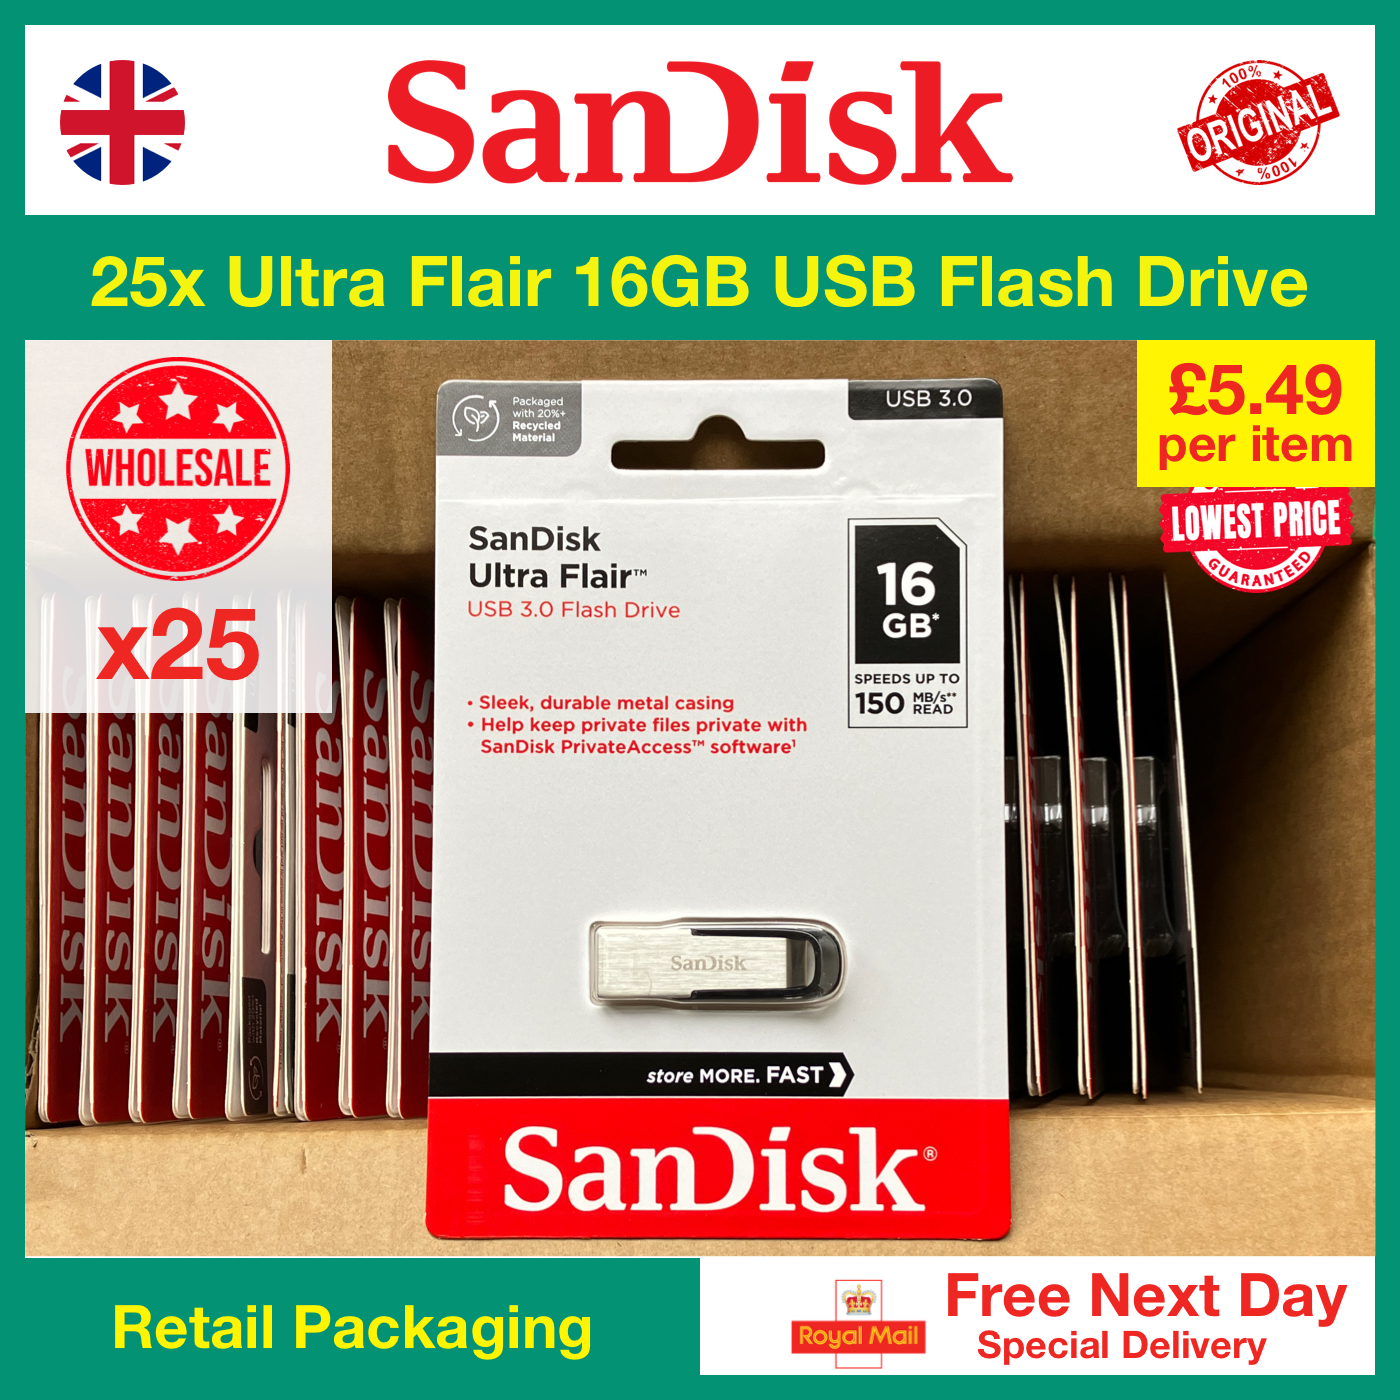 25x SanDisk Ultra Flair 16GB Flash Drives Wholesale